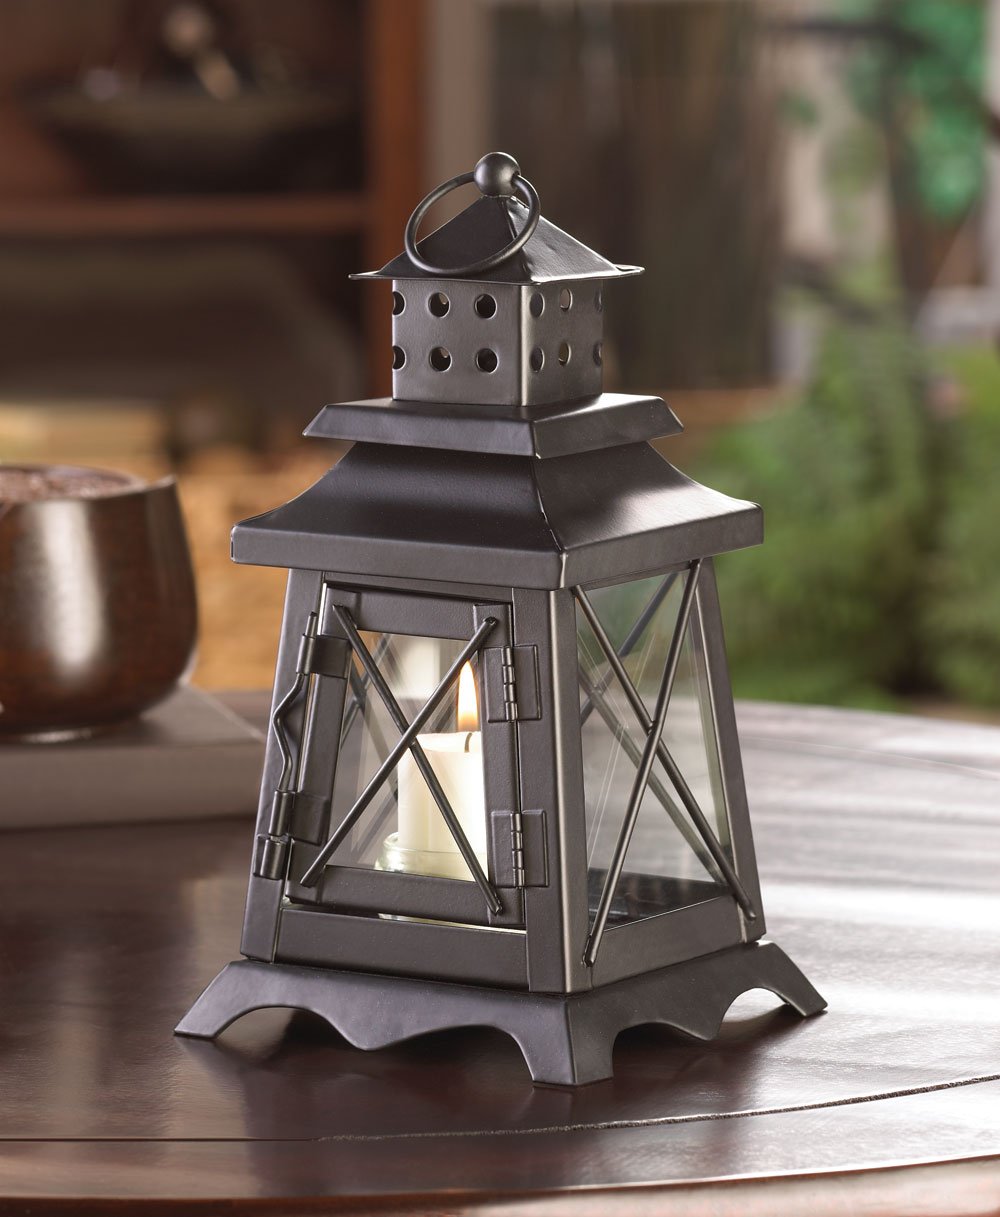 Watch tower candle lantern